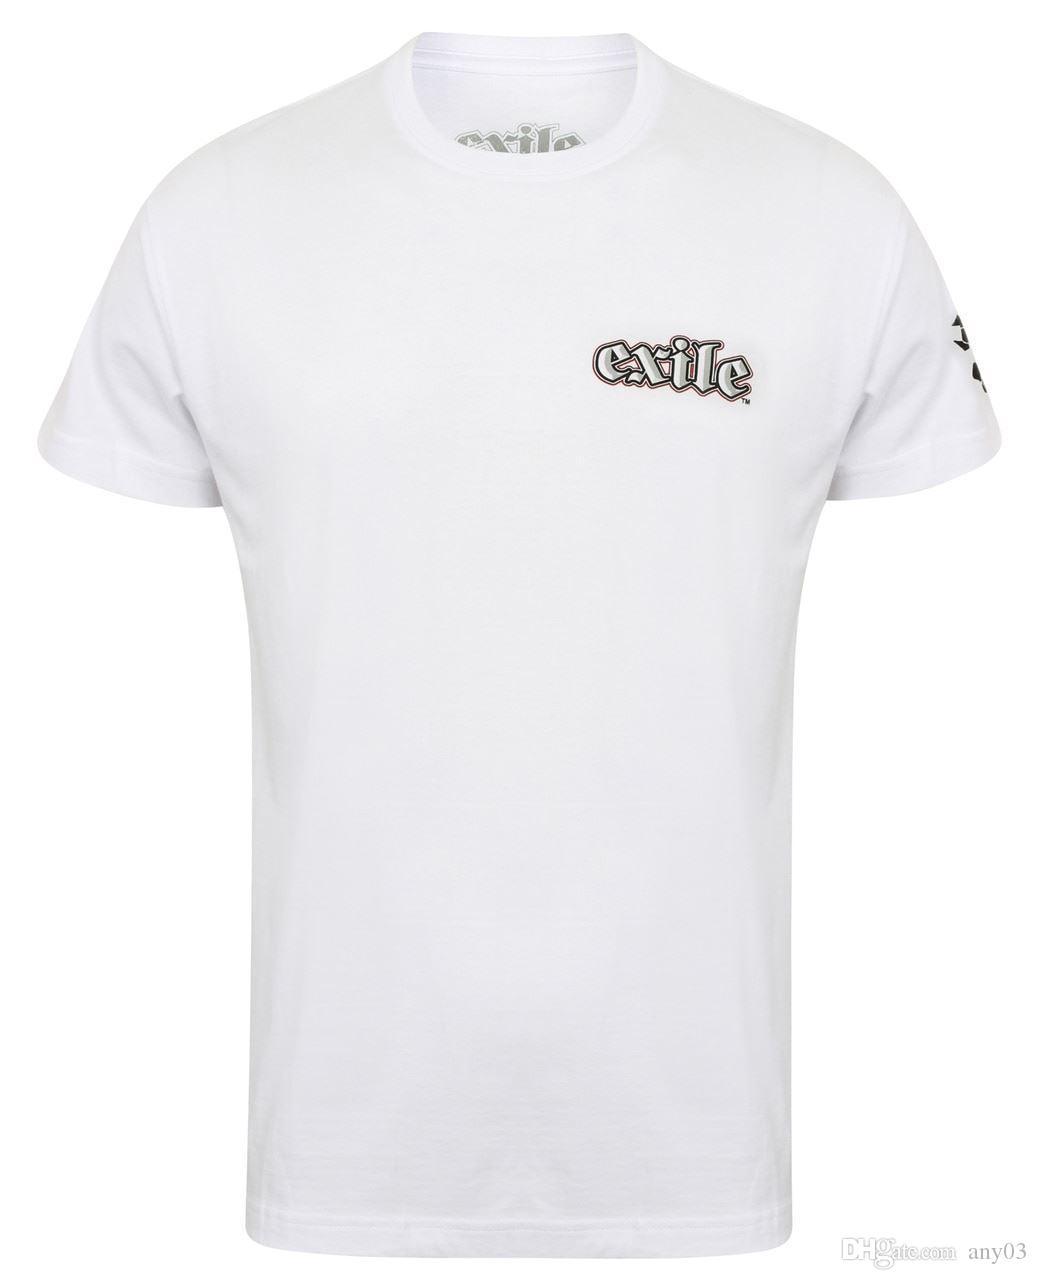 Exile Oval Logo - Oval Exile Logo T Shirt (White)